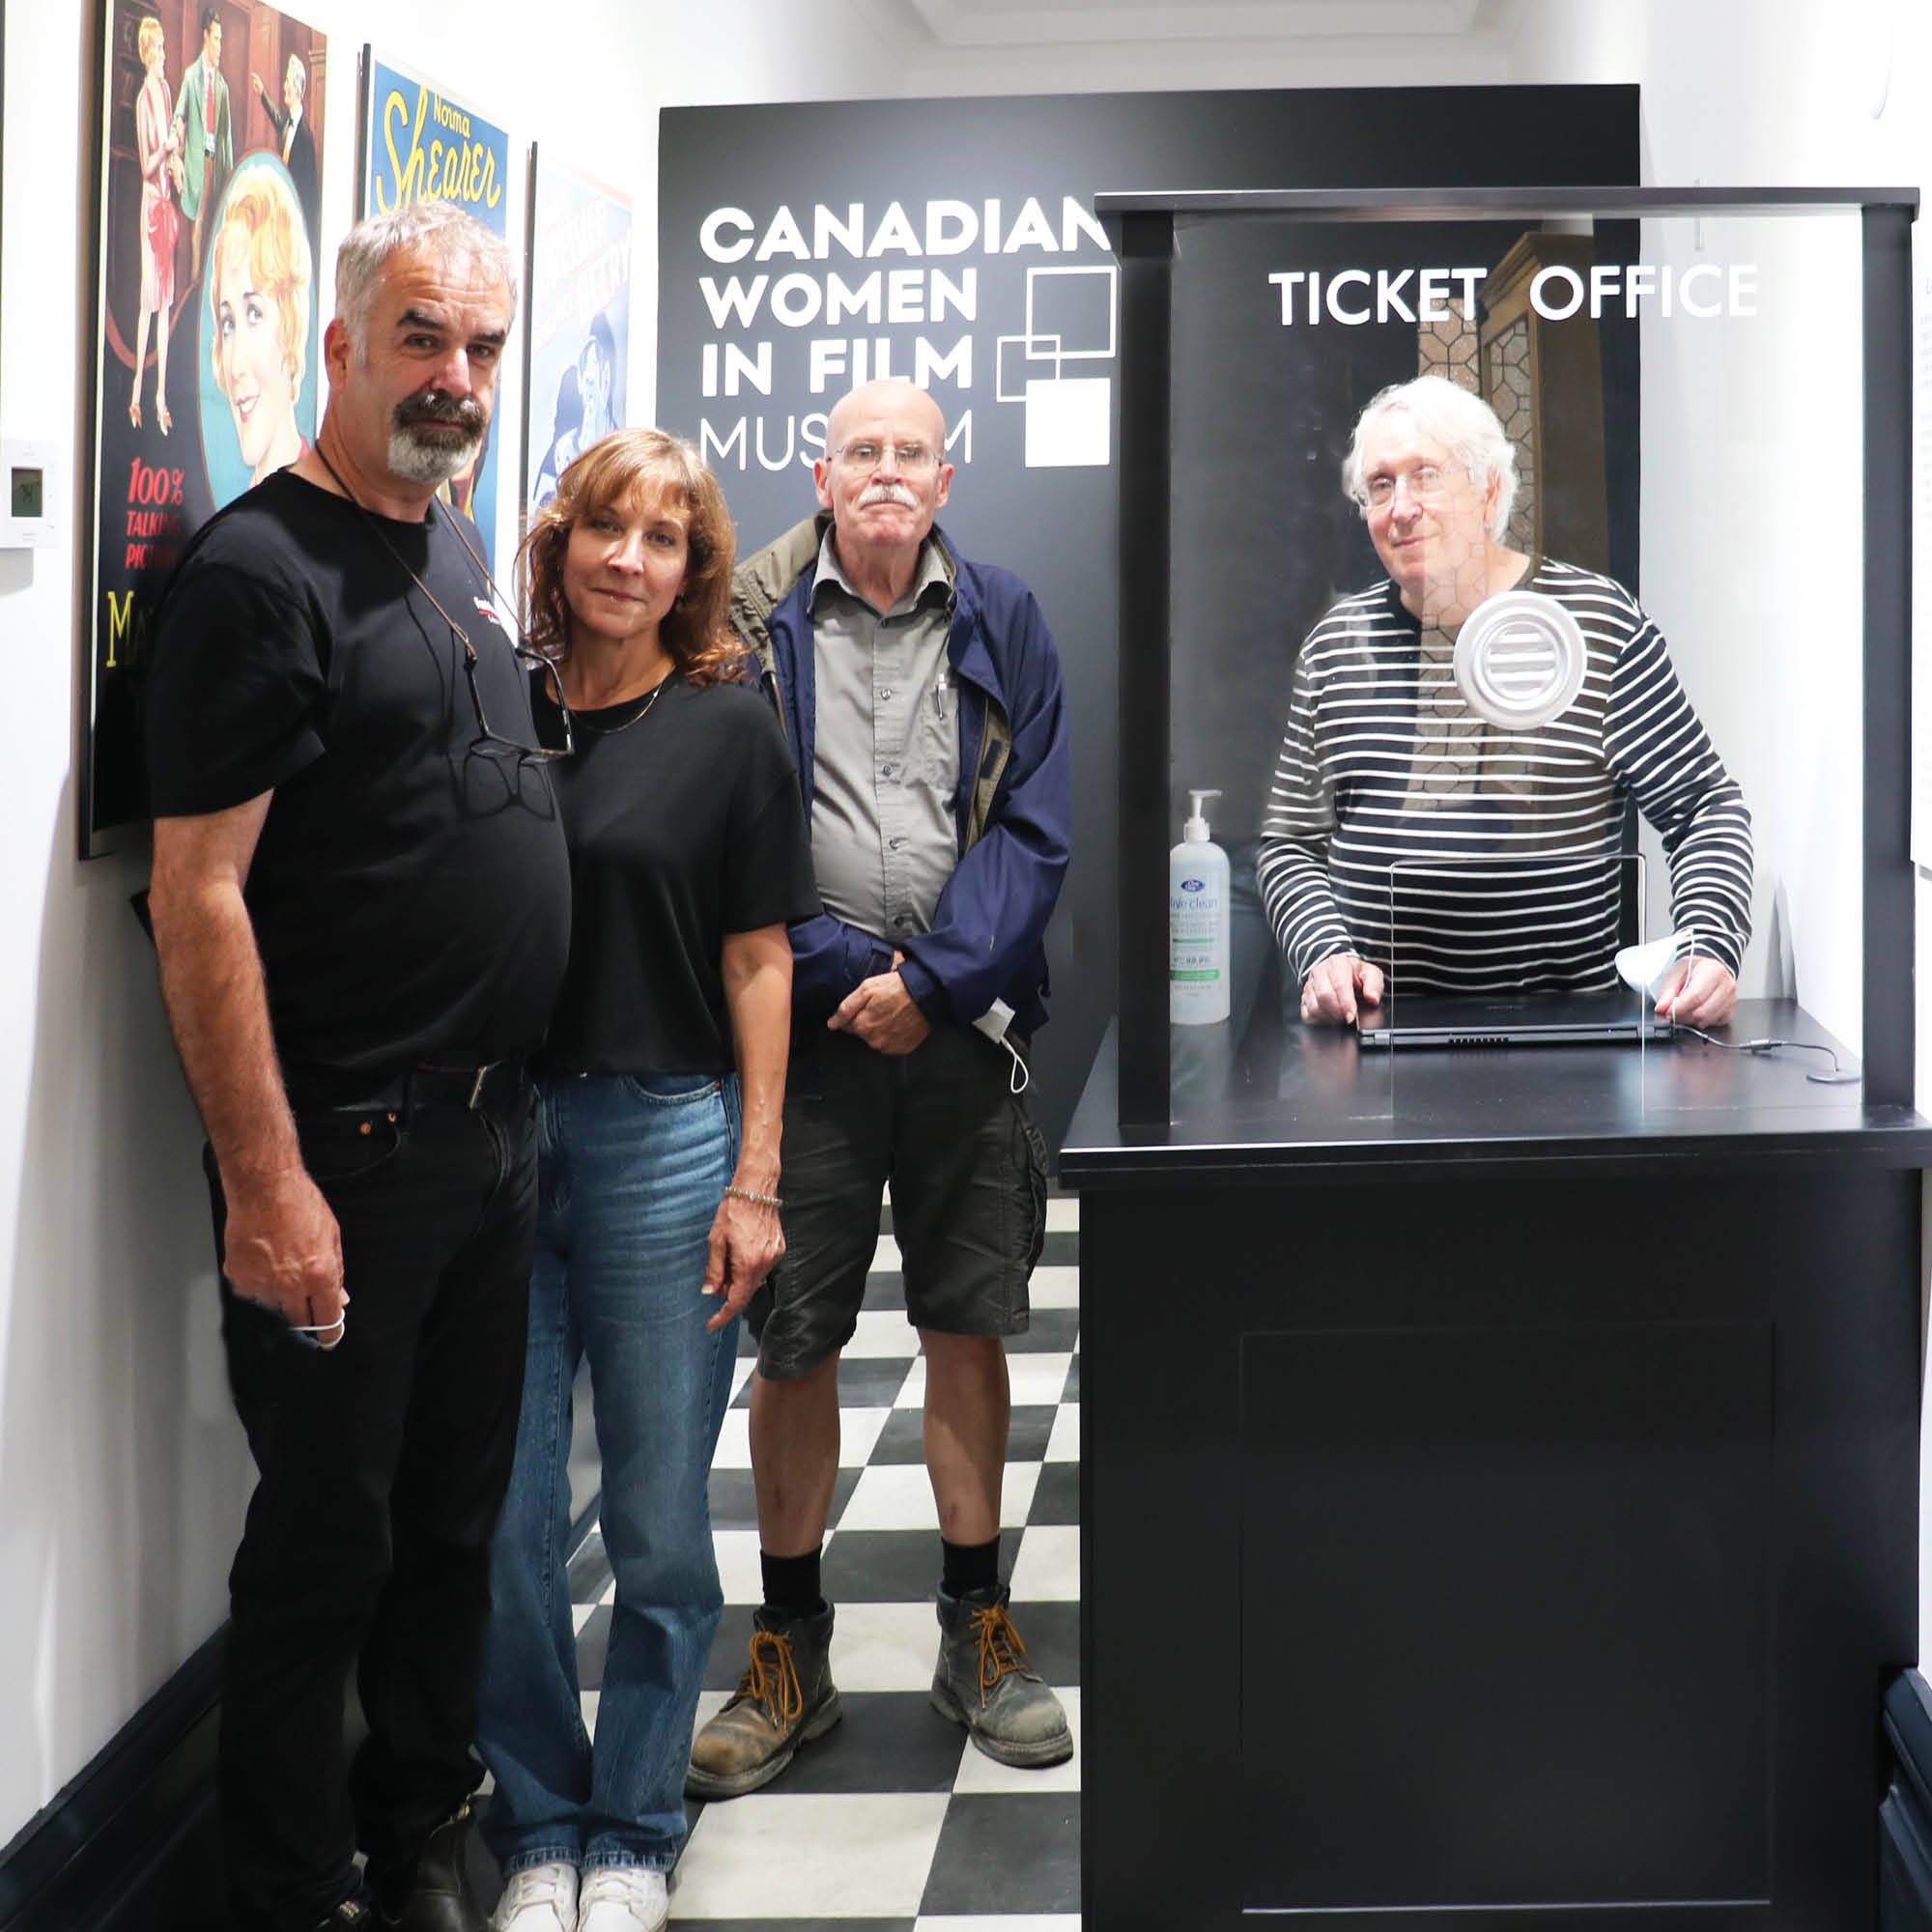 Frank Bouwmans, Rosanna Bouwmans and Bruce Tindall at Cdn Women in Film Museum with Rick Miller 